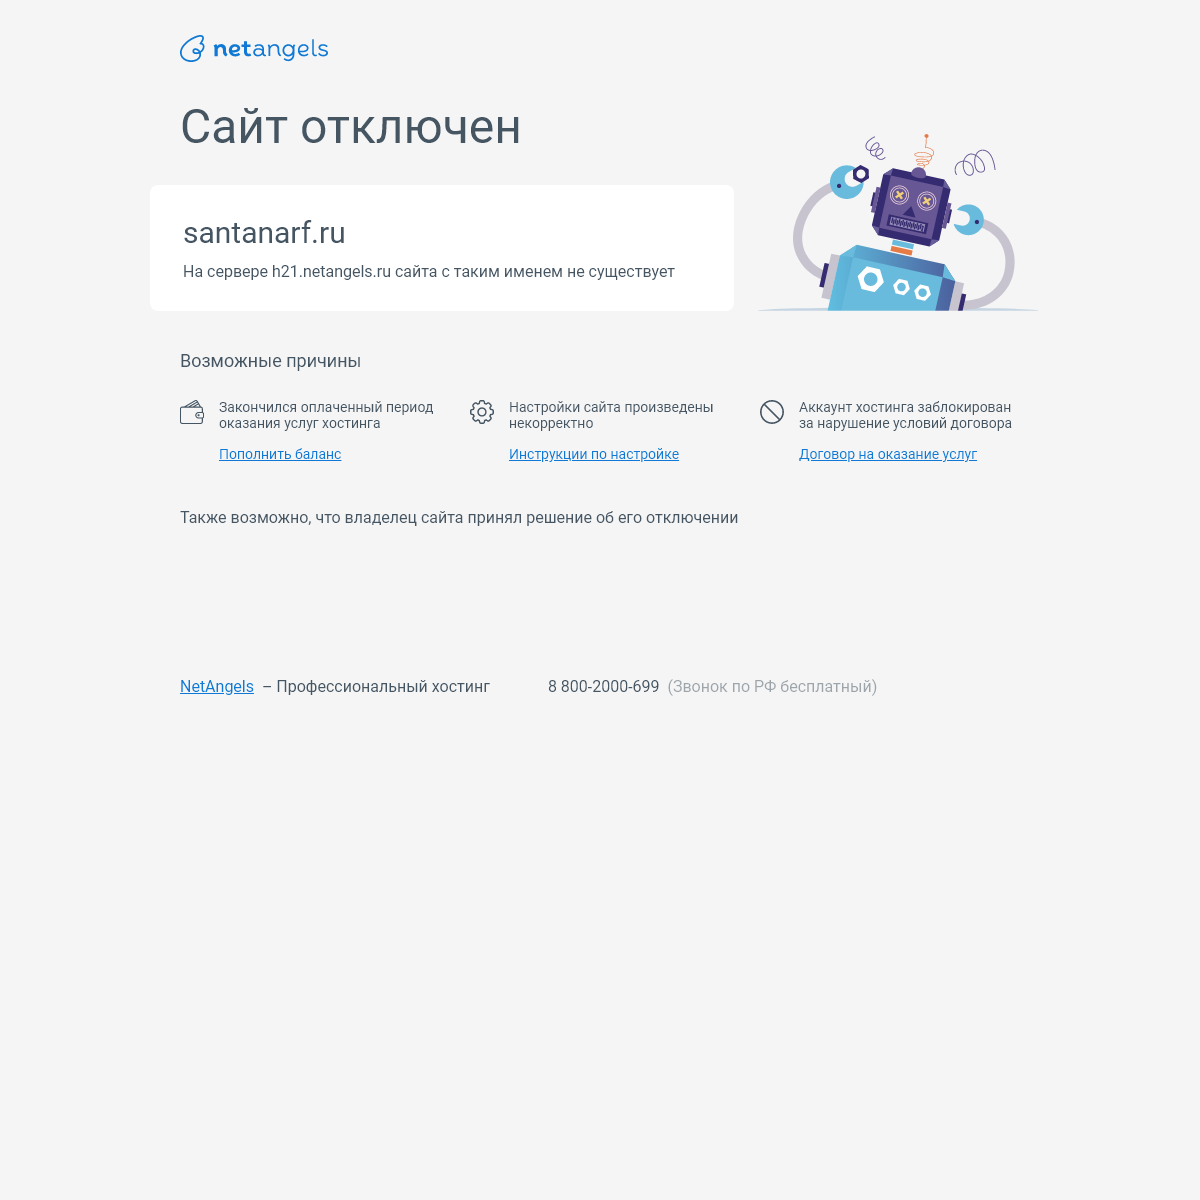 A complete backup of santanarf.ru